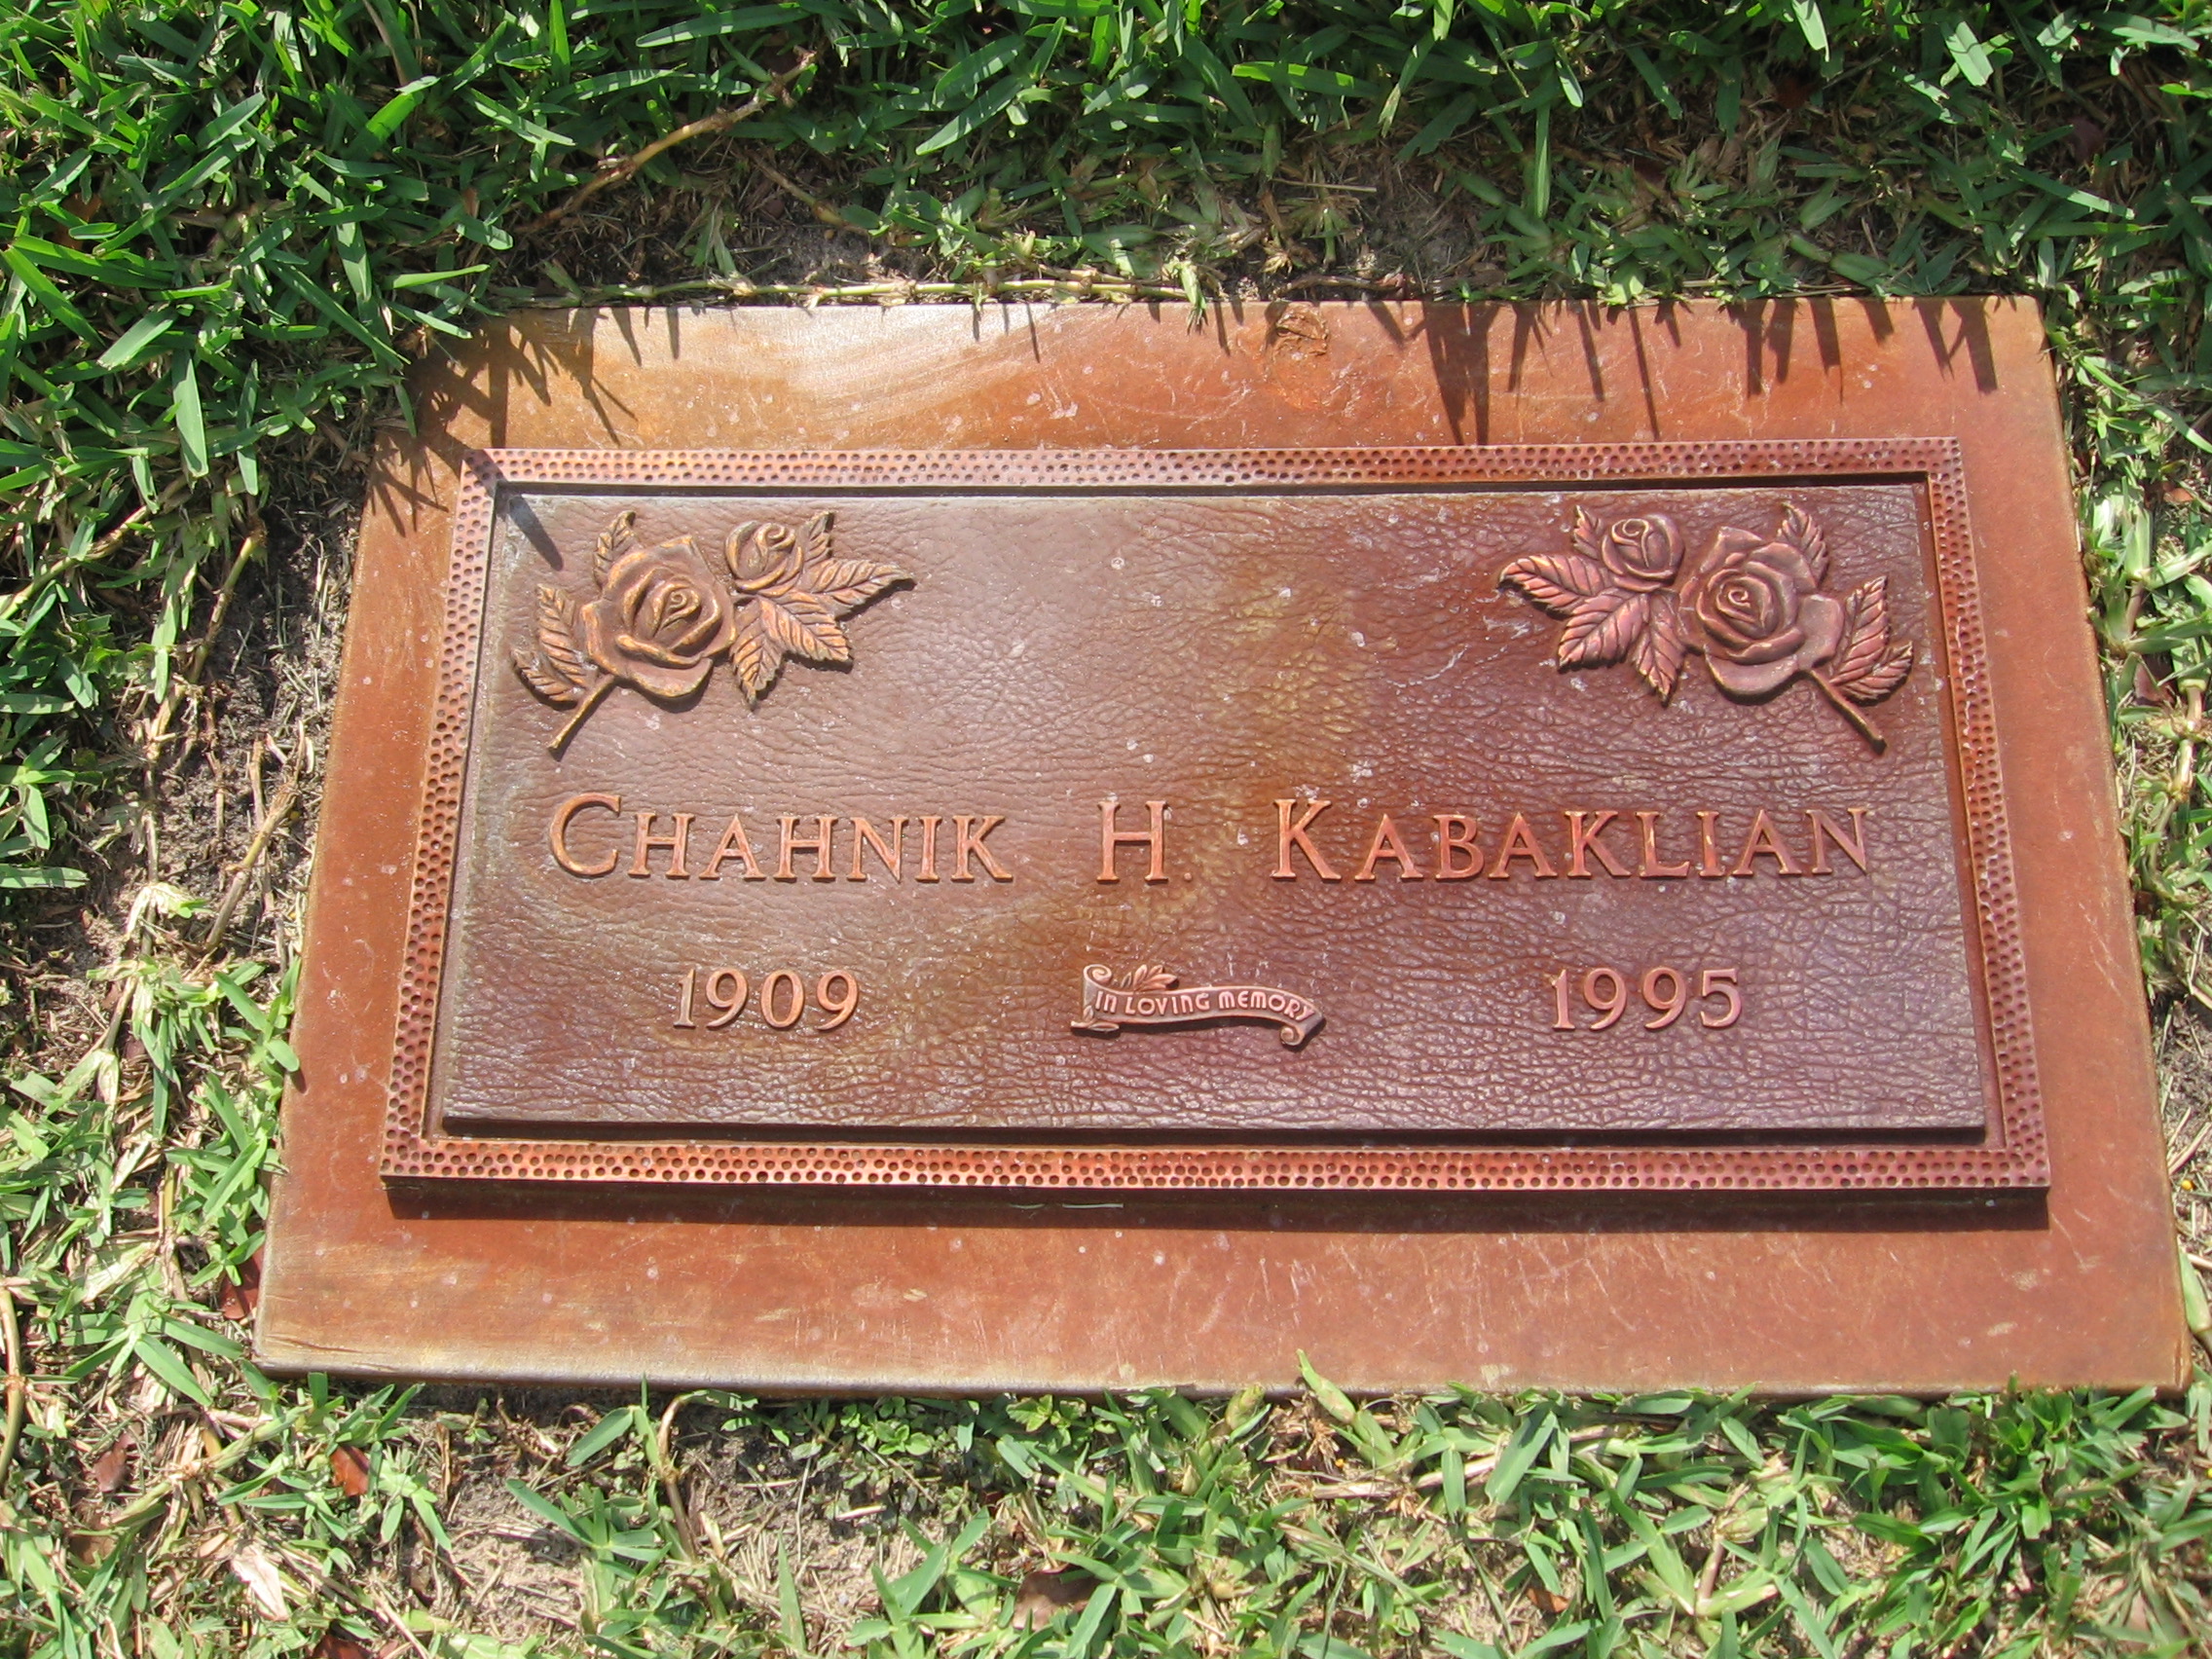 Chahnik H Kabaklian